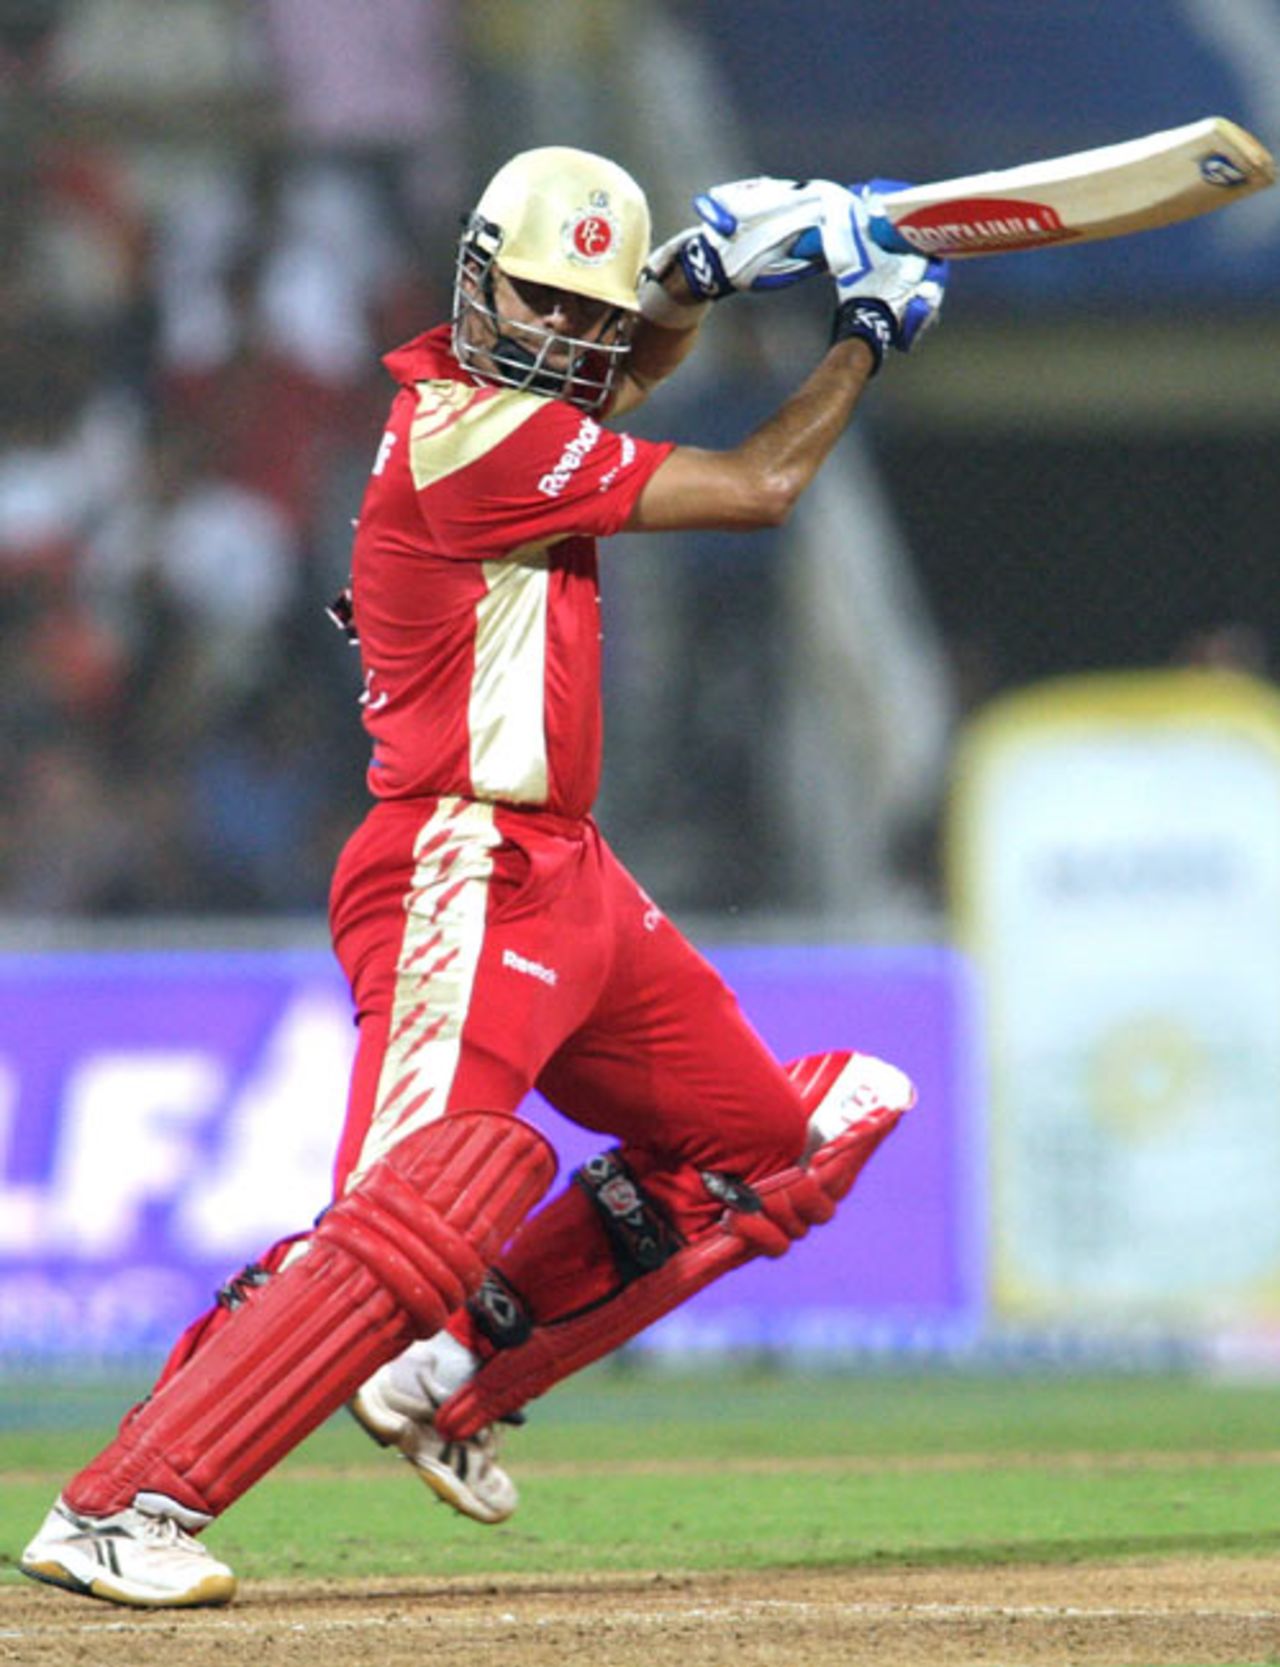 Rahul Dravid plays the ball elegantly towards point, Deccan Chargers v Royal Challengers Bangalore, IPL, Mumbai, April 24, 2010